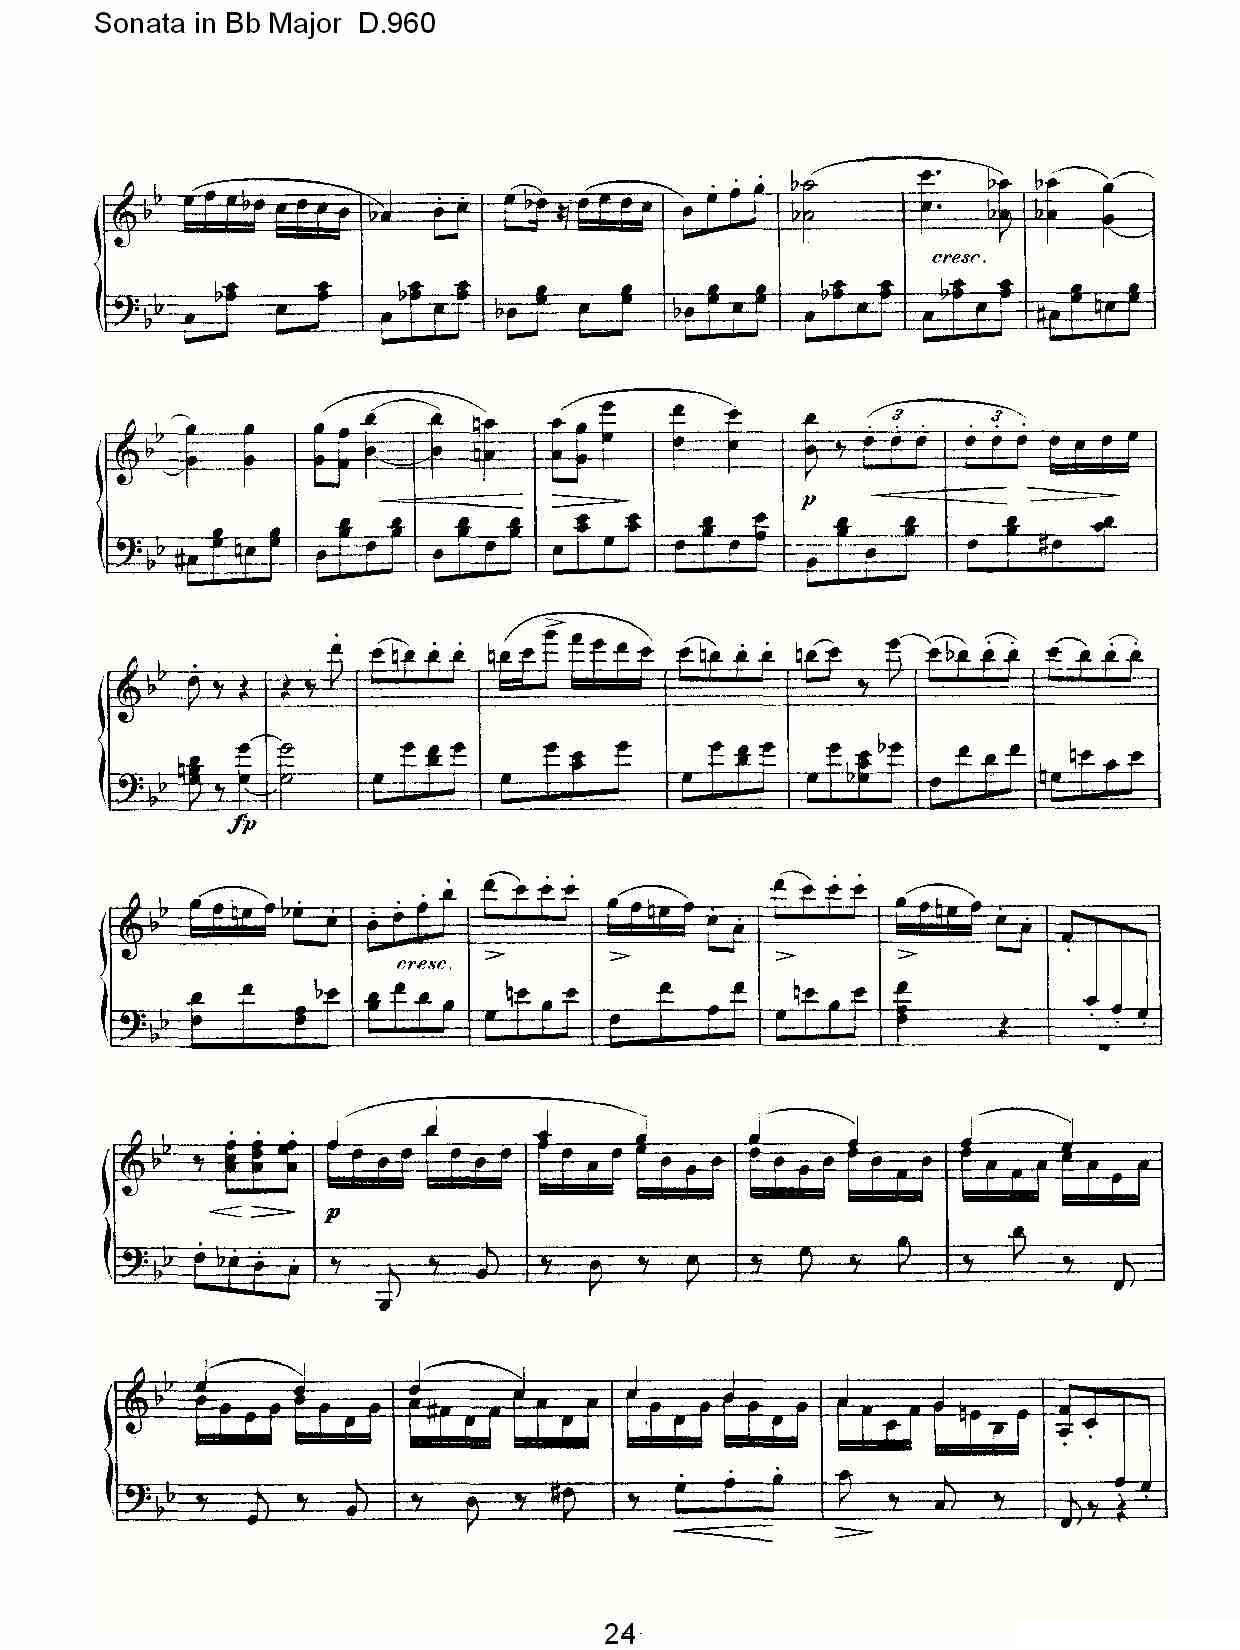 Sonata in Bb Major D.960（Bb大调奏鸣曲 D.960）钢琴曲谱（图24）